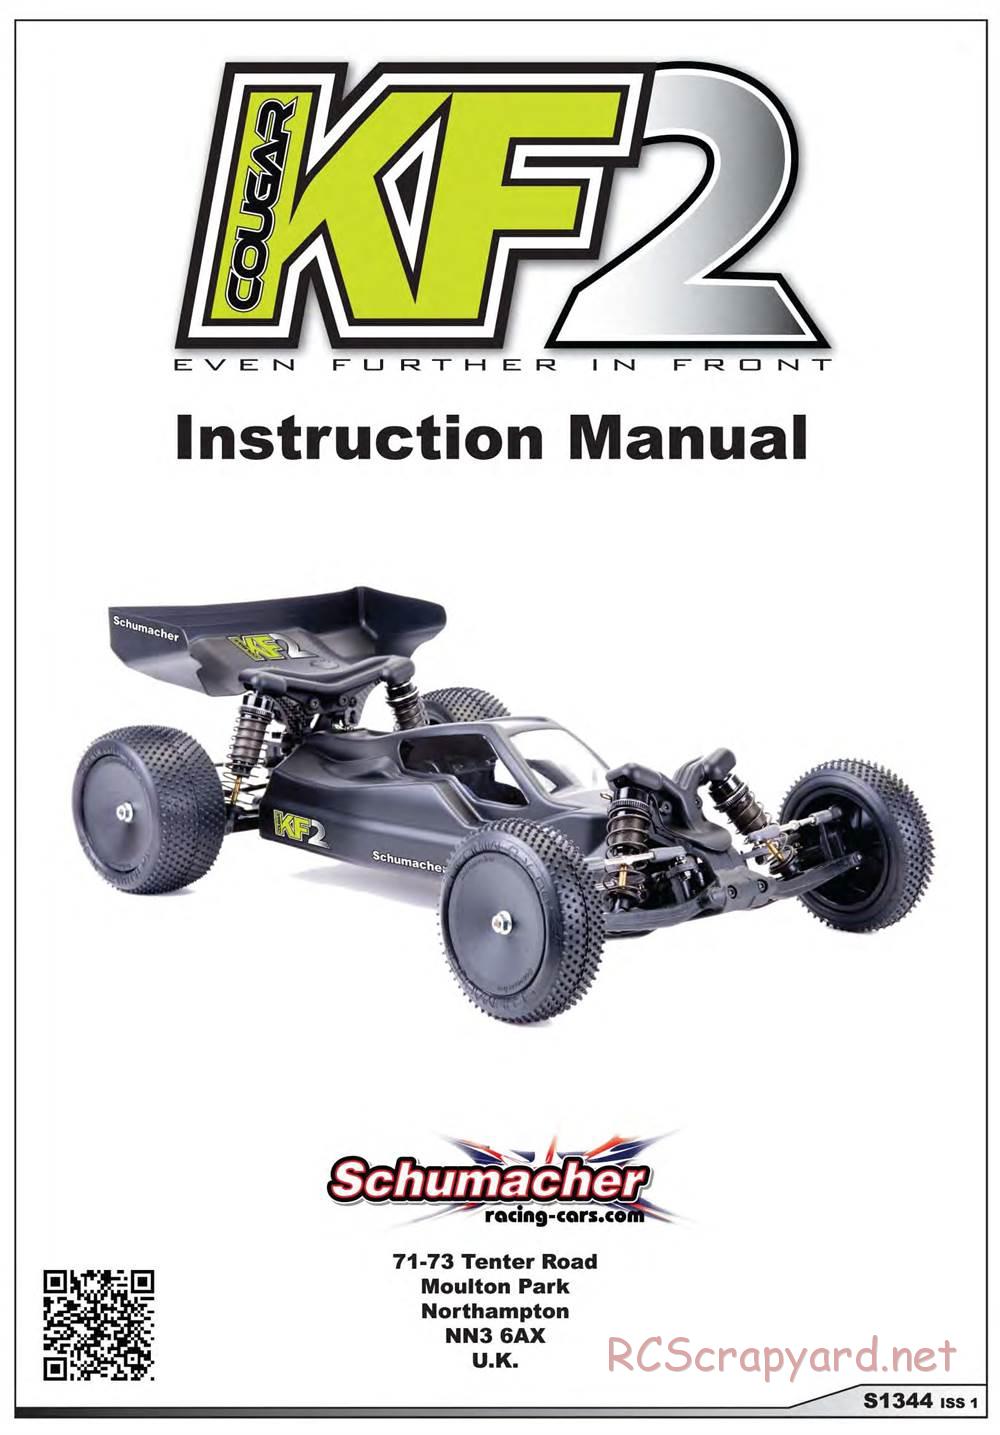 Schumacher - Cougar KF2 - Manual - Page 1